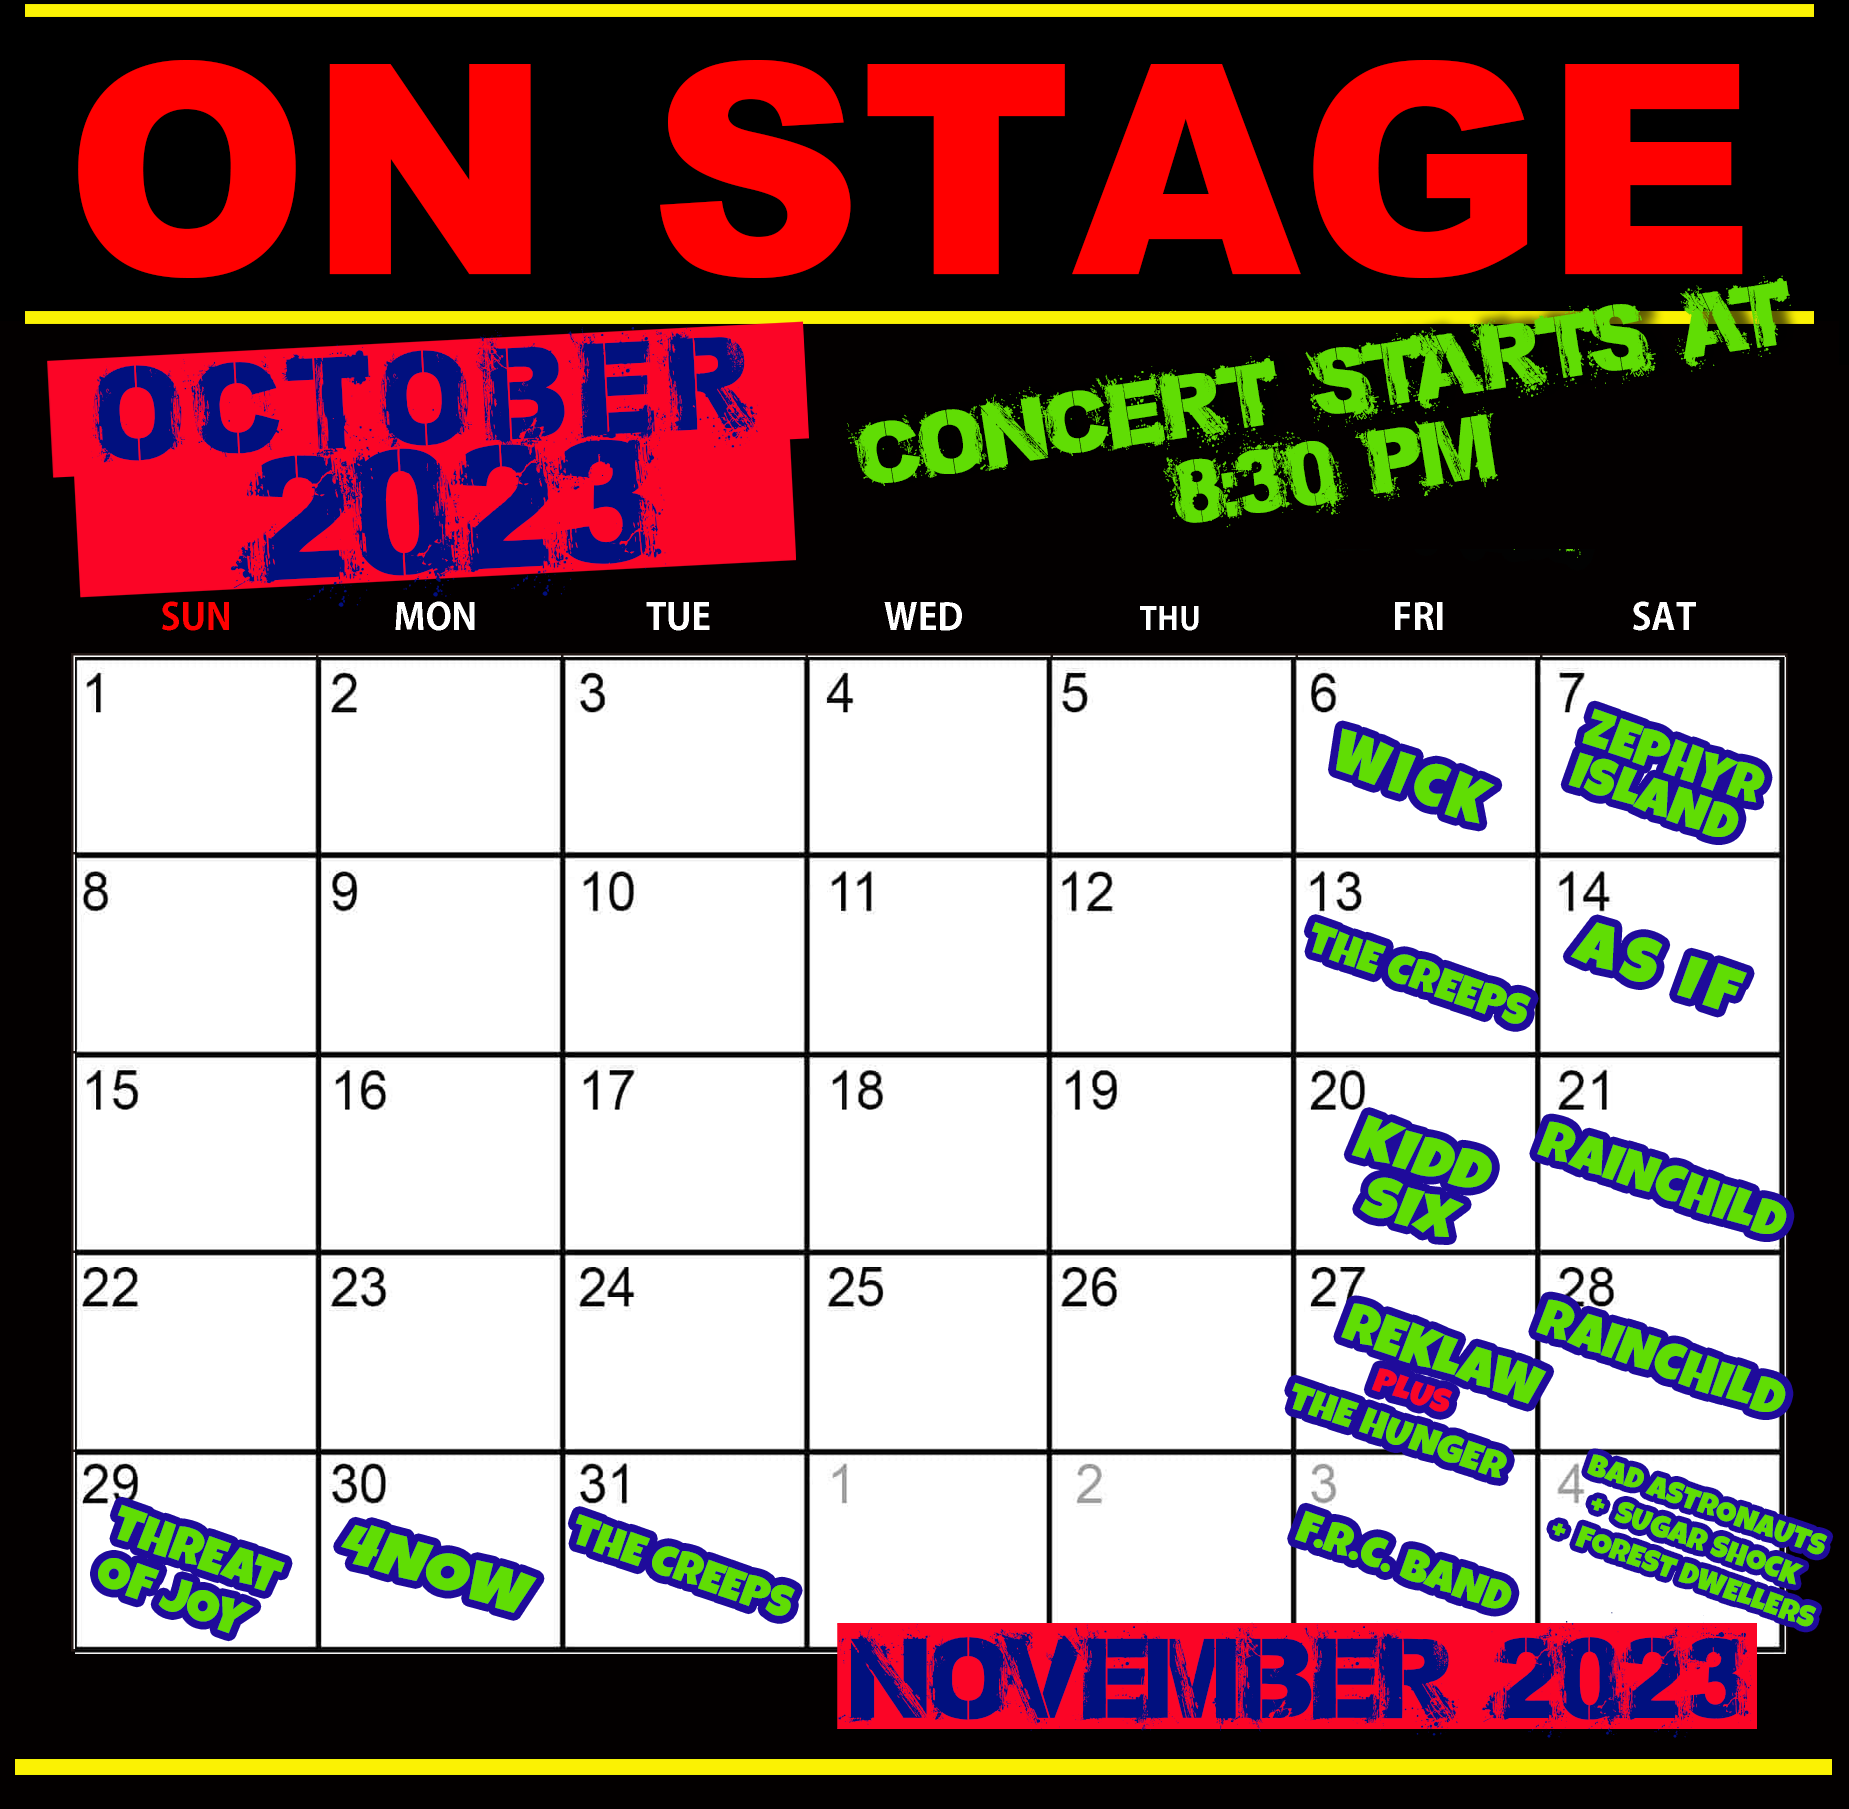 On Stage calendar